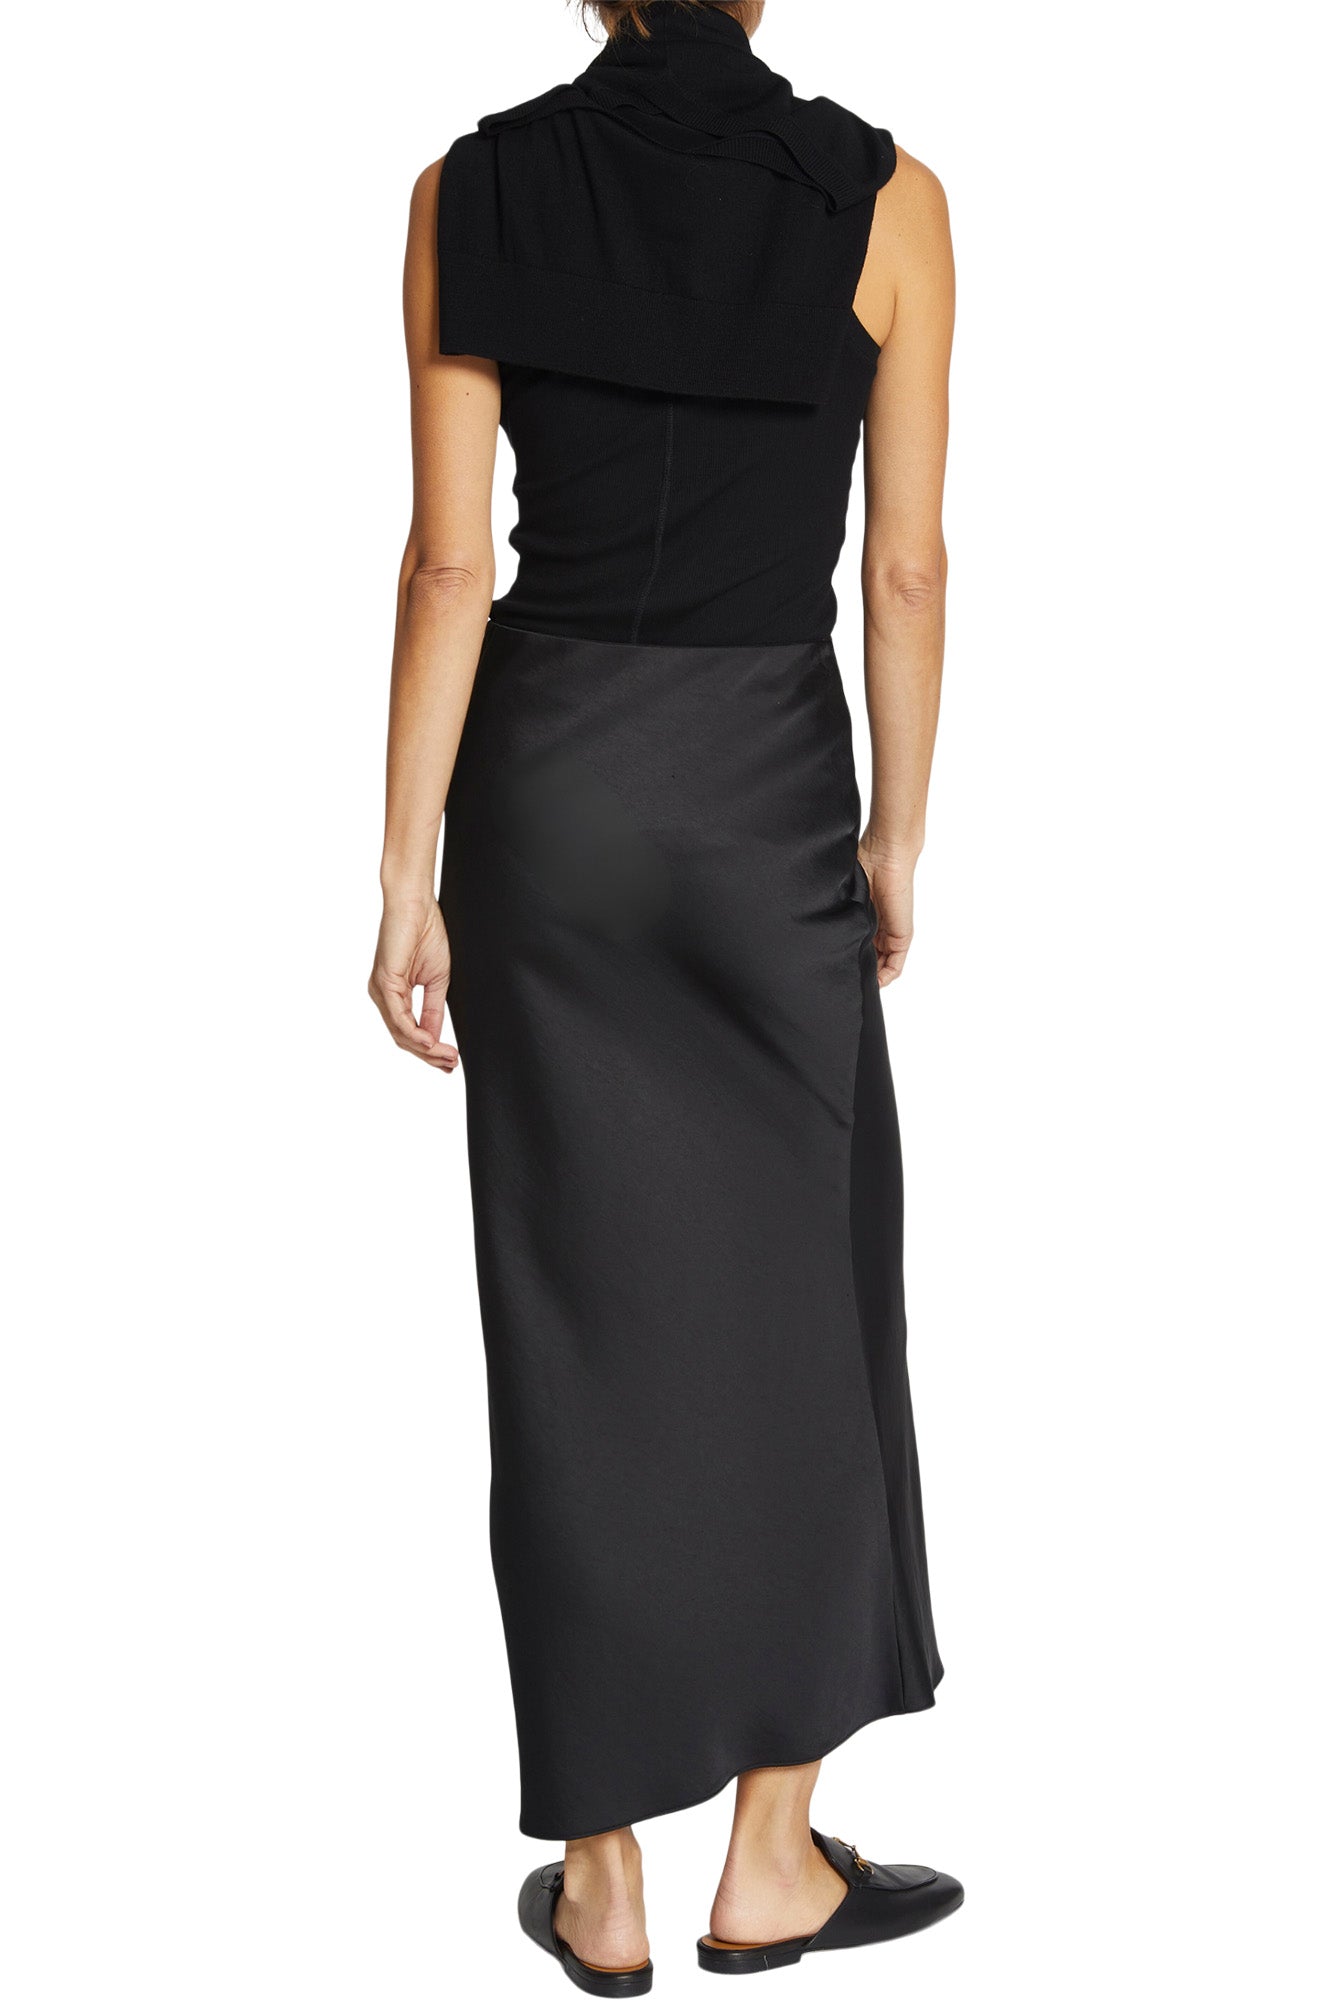 Saint Art Talia Skirt in Black